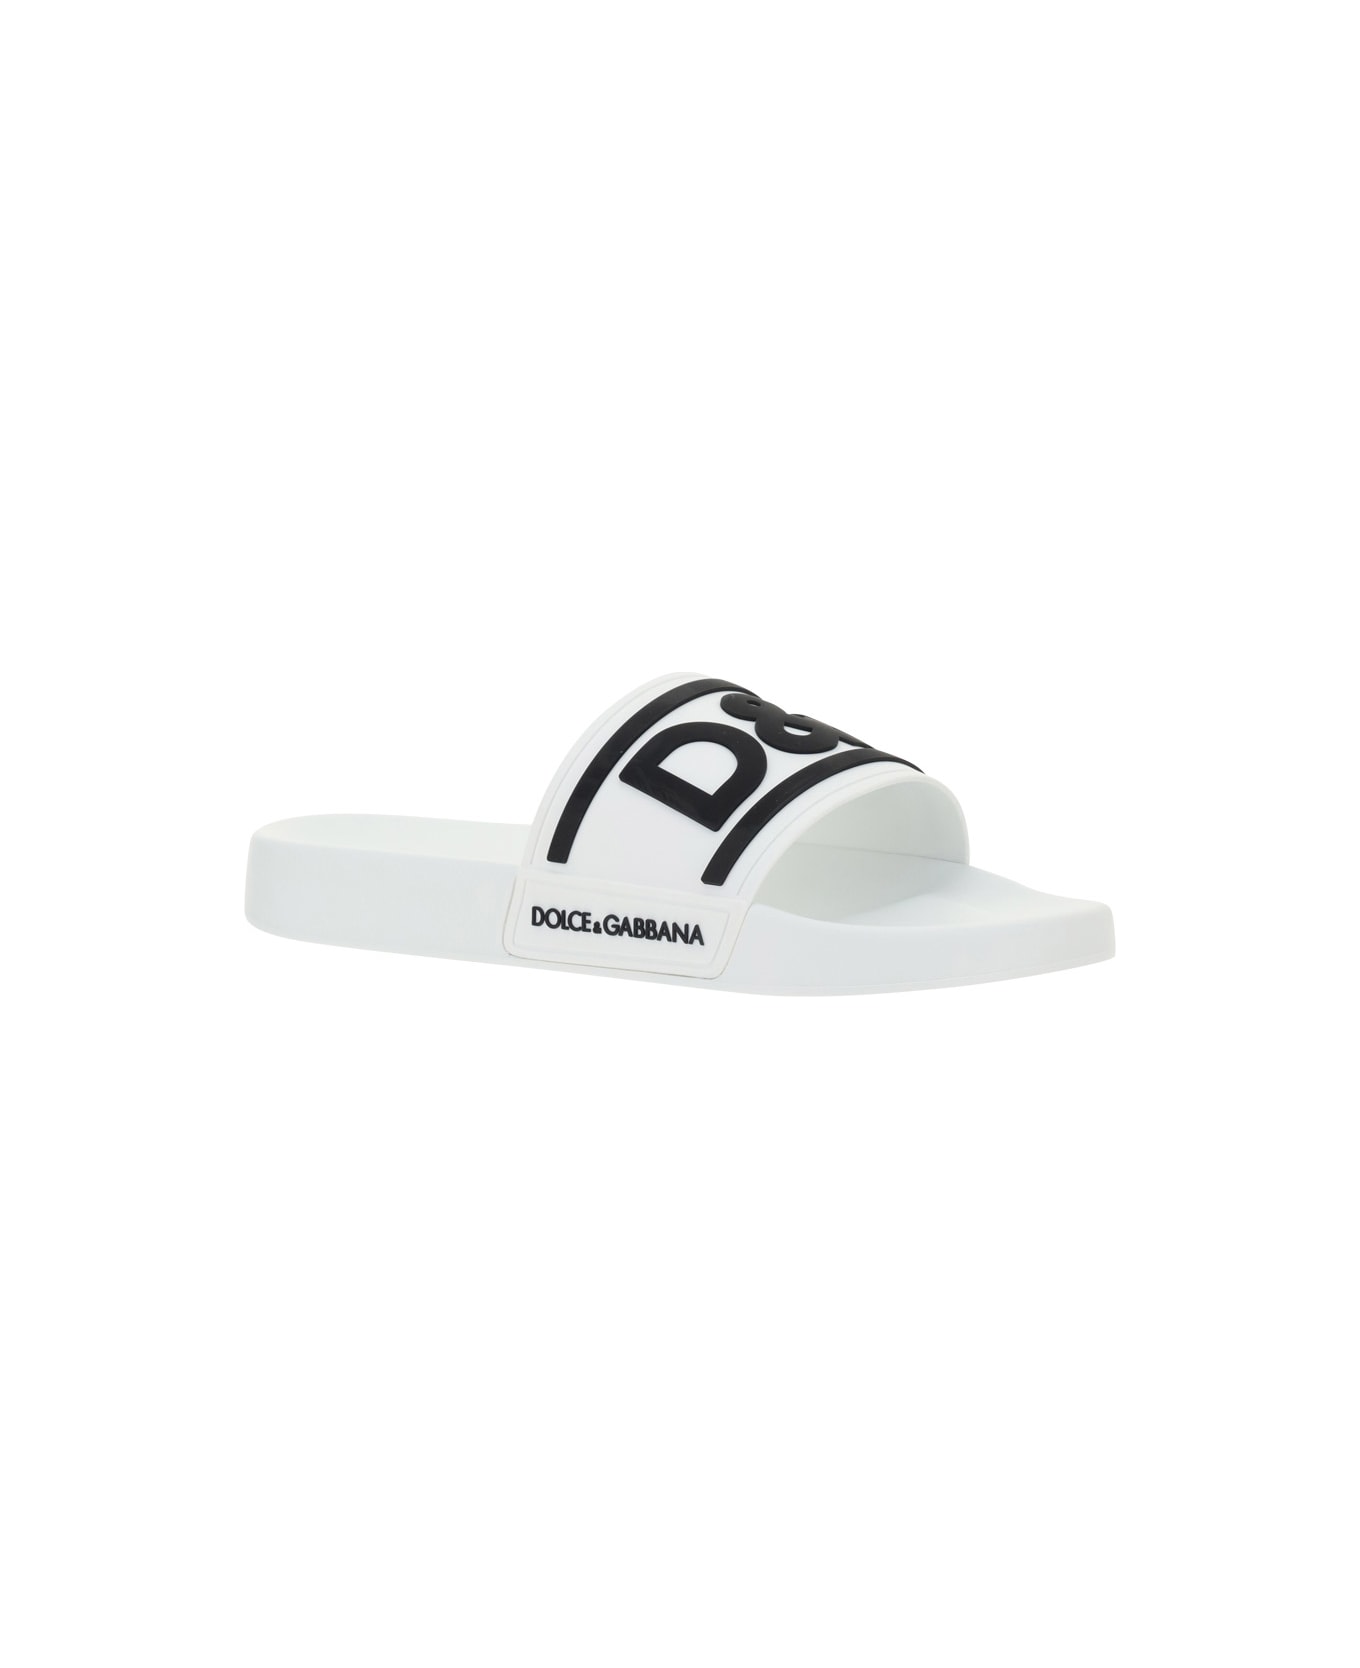 Dolce & Gabbana Sandals - Bianco/nero